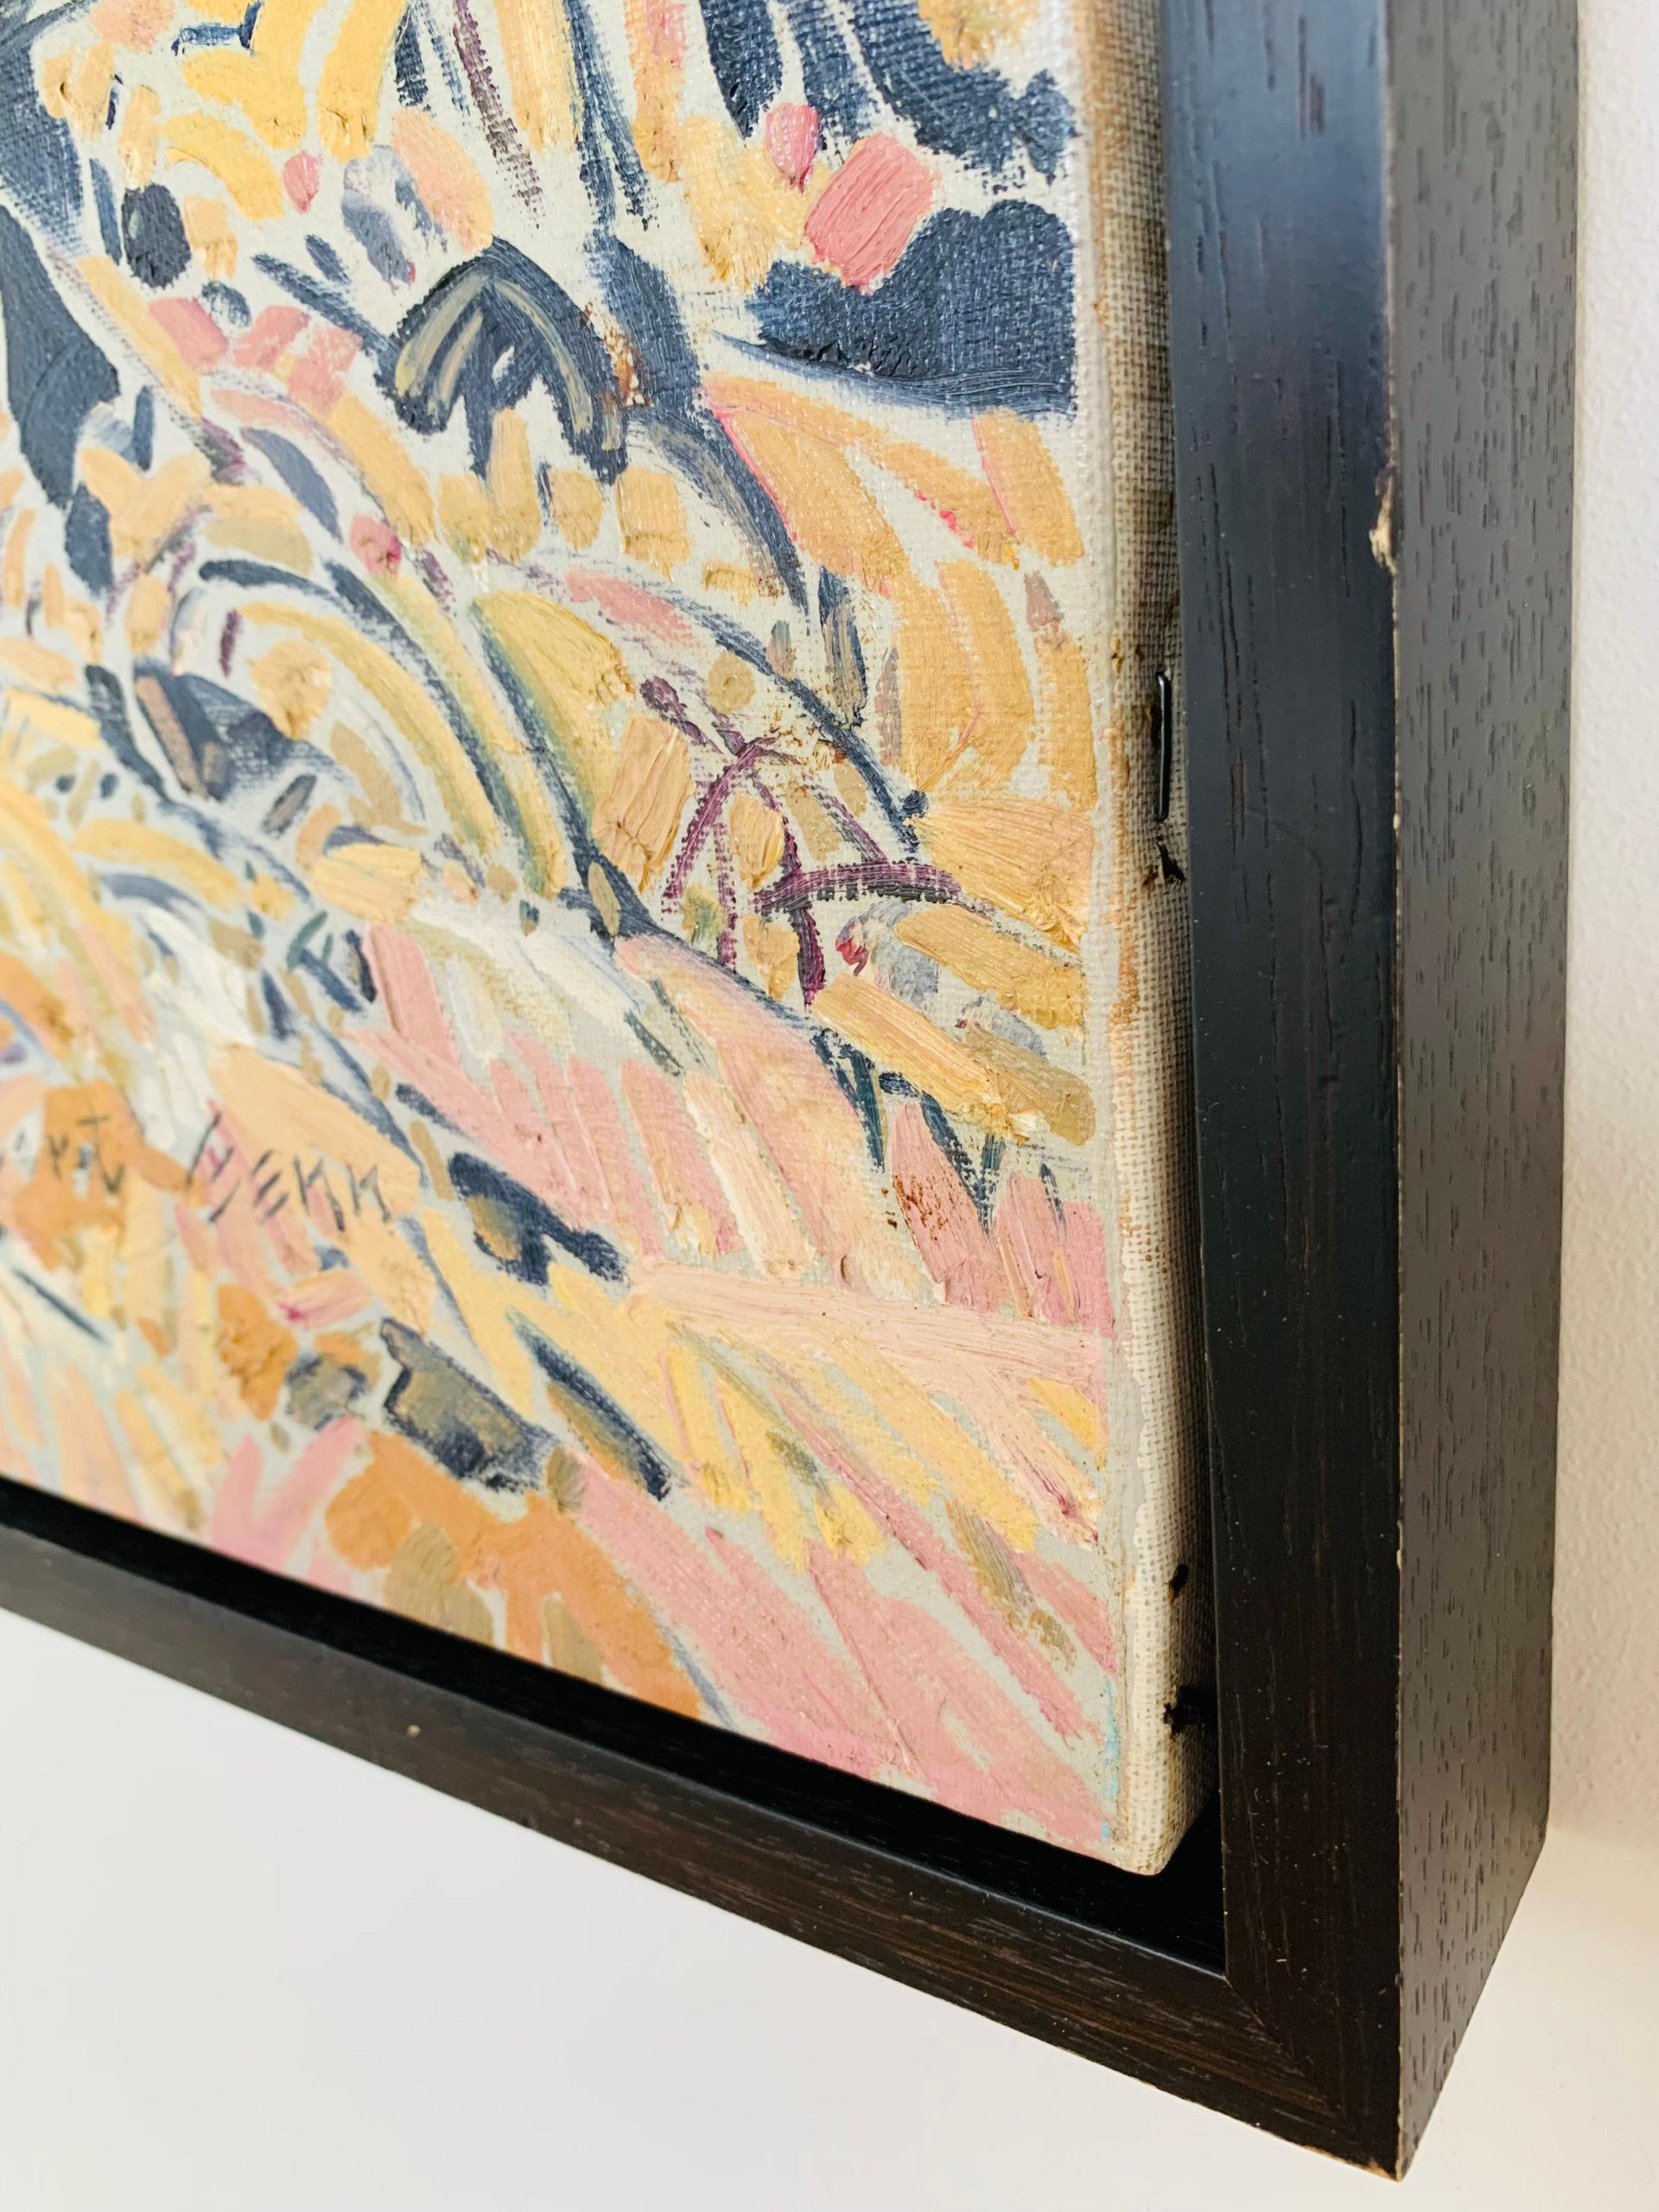 Robert Genn, 1936-2014, Canadian
oil on canvas
24 x 30 in
61 x 76.2 cm
signed 
framed